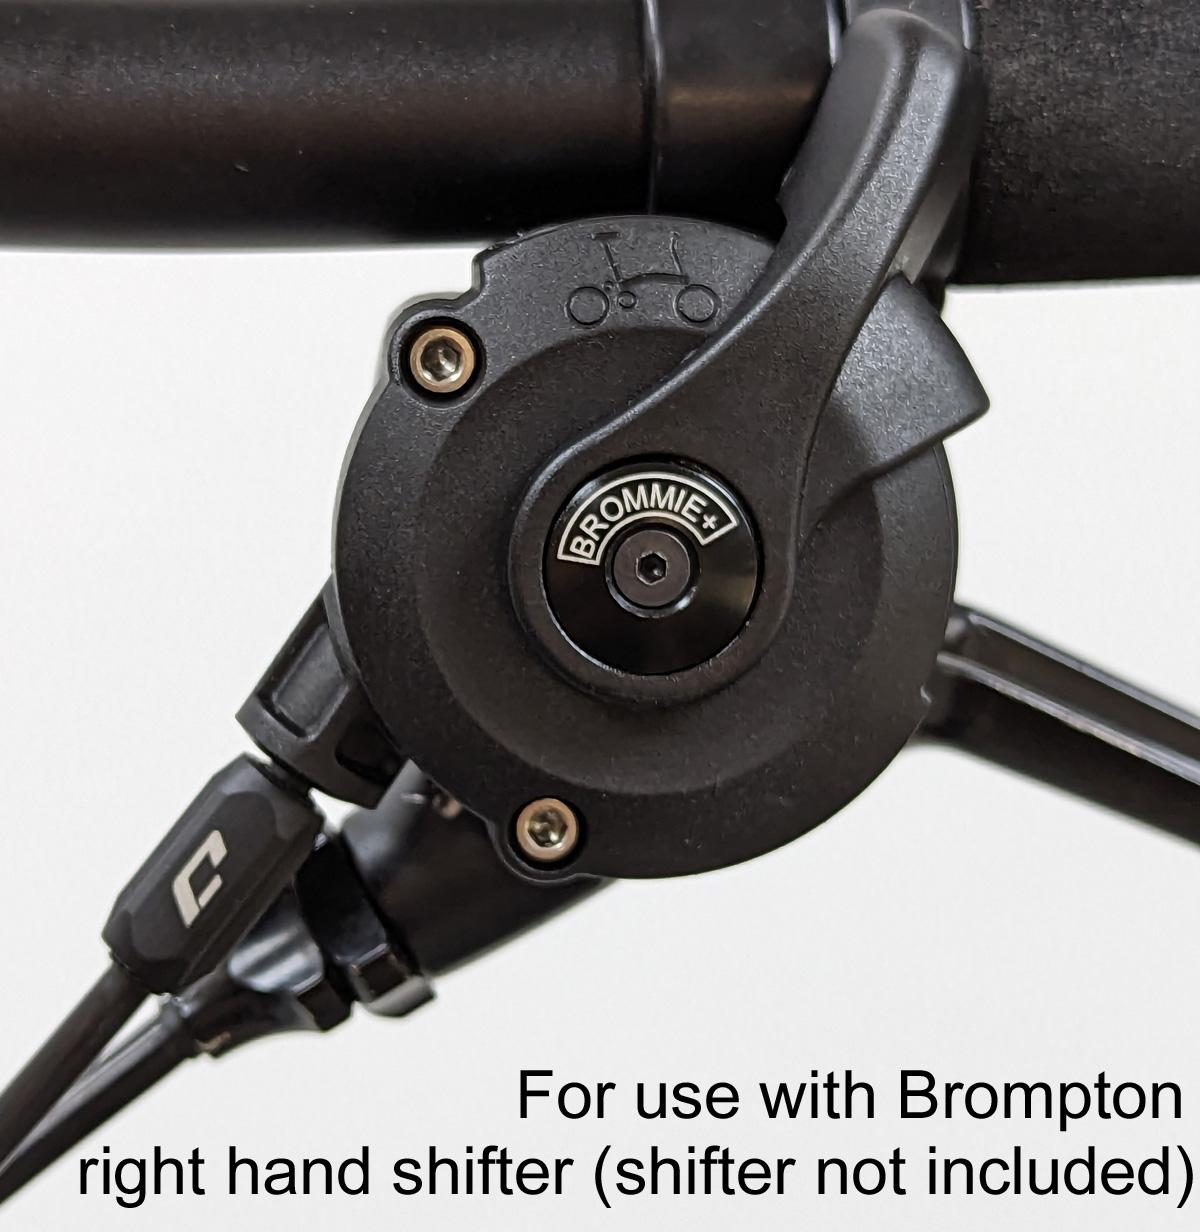 5 speed kit for C line 2 Speed Bike - for Brompton OE Hub